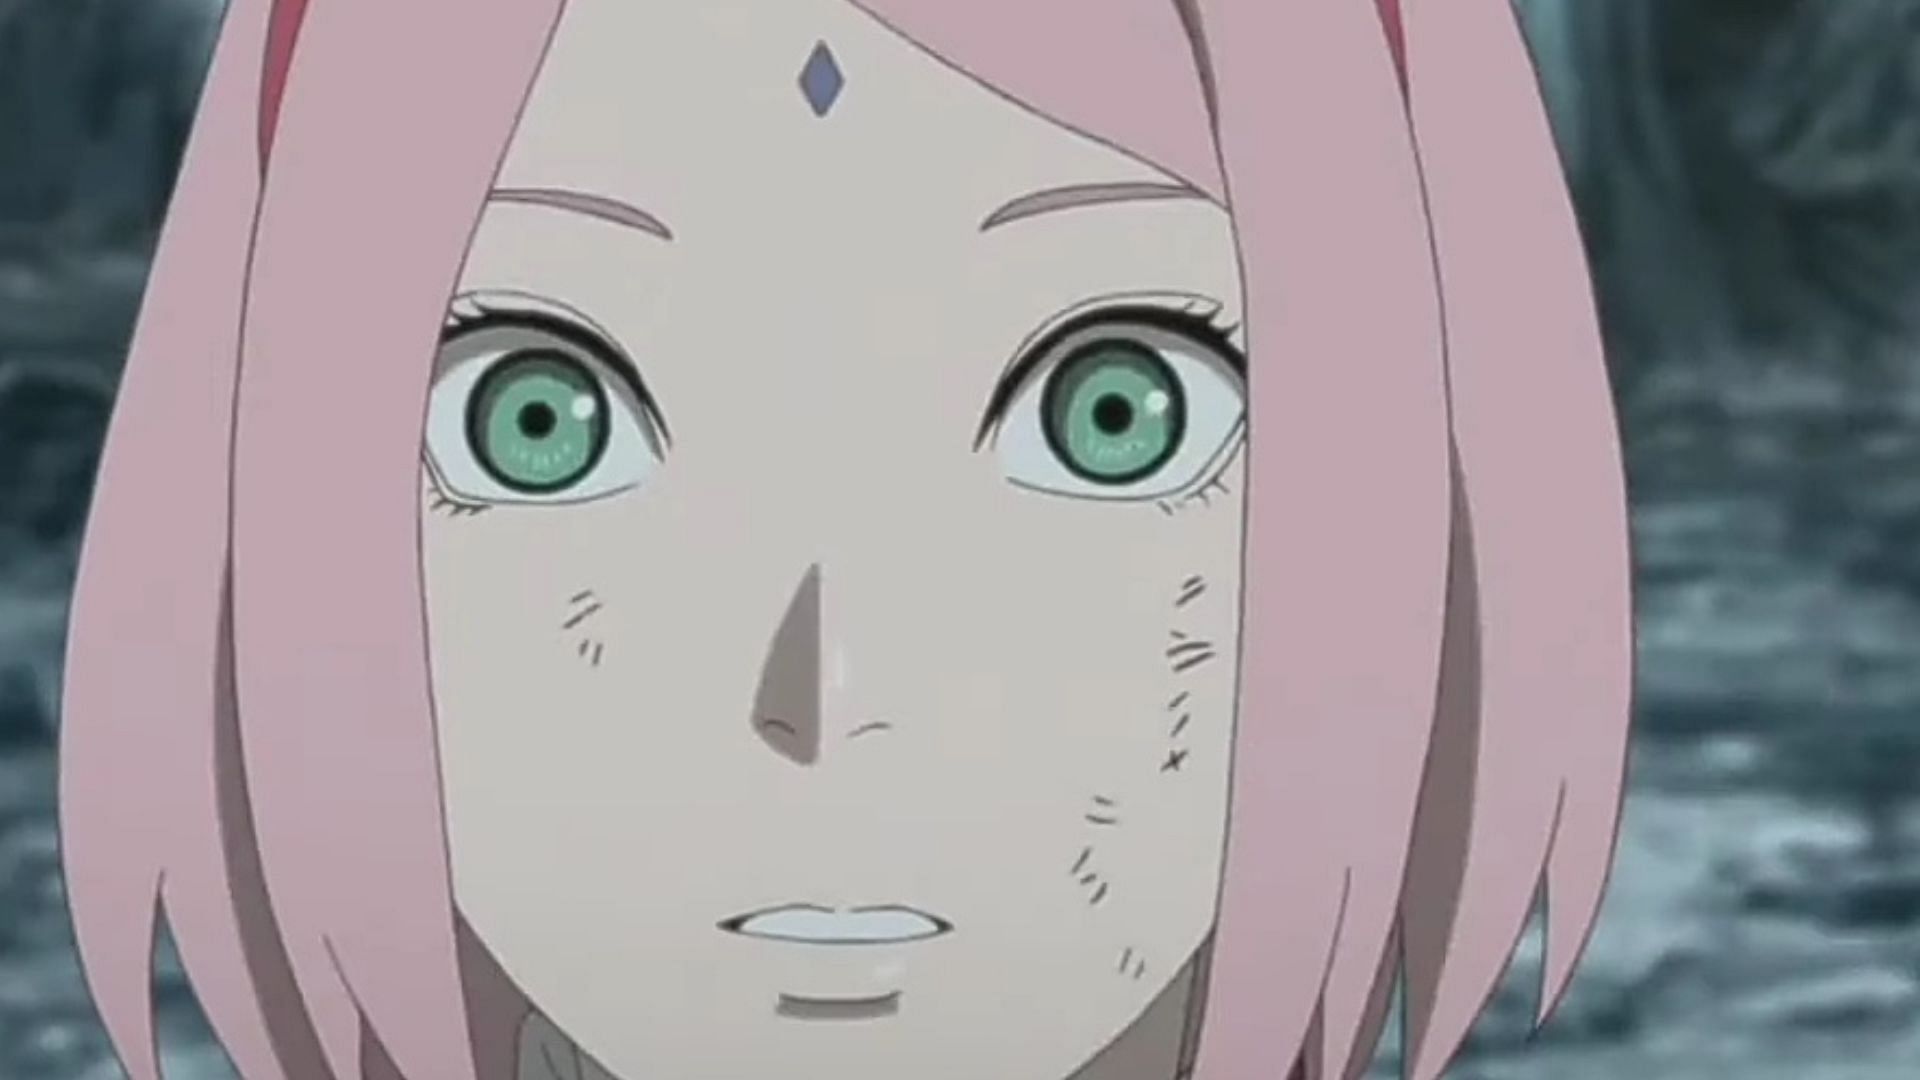 Sakura as seen in the anime (Image via Studio Pierrot)